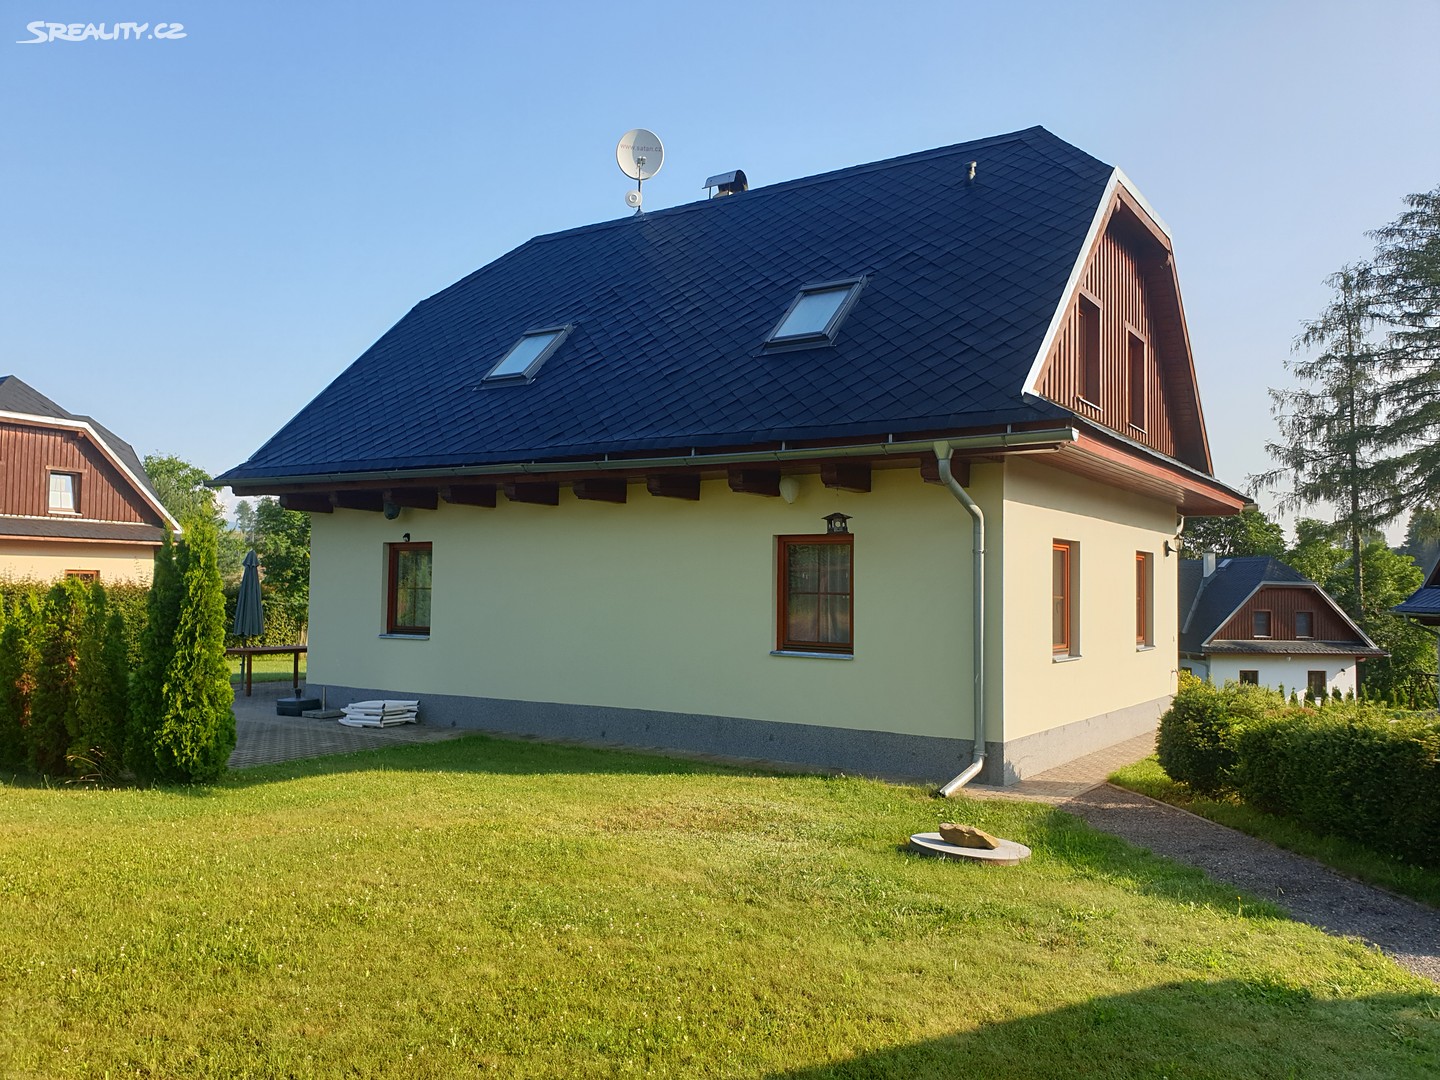 Prodej  vily 160 m², pozemek 950 m², Staré Buky - Horní Staré Buky, okres Trutnov